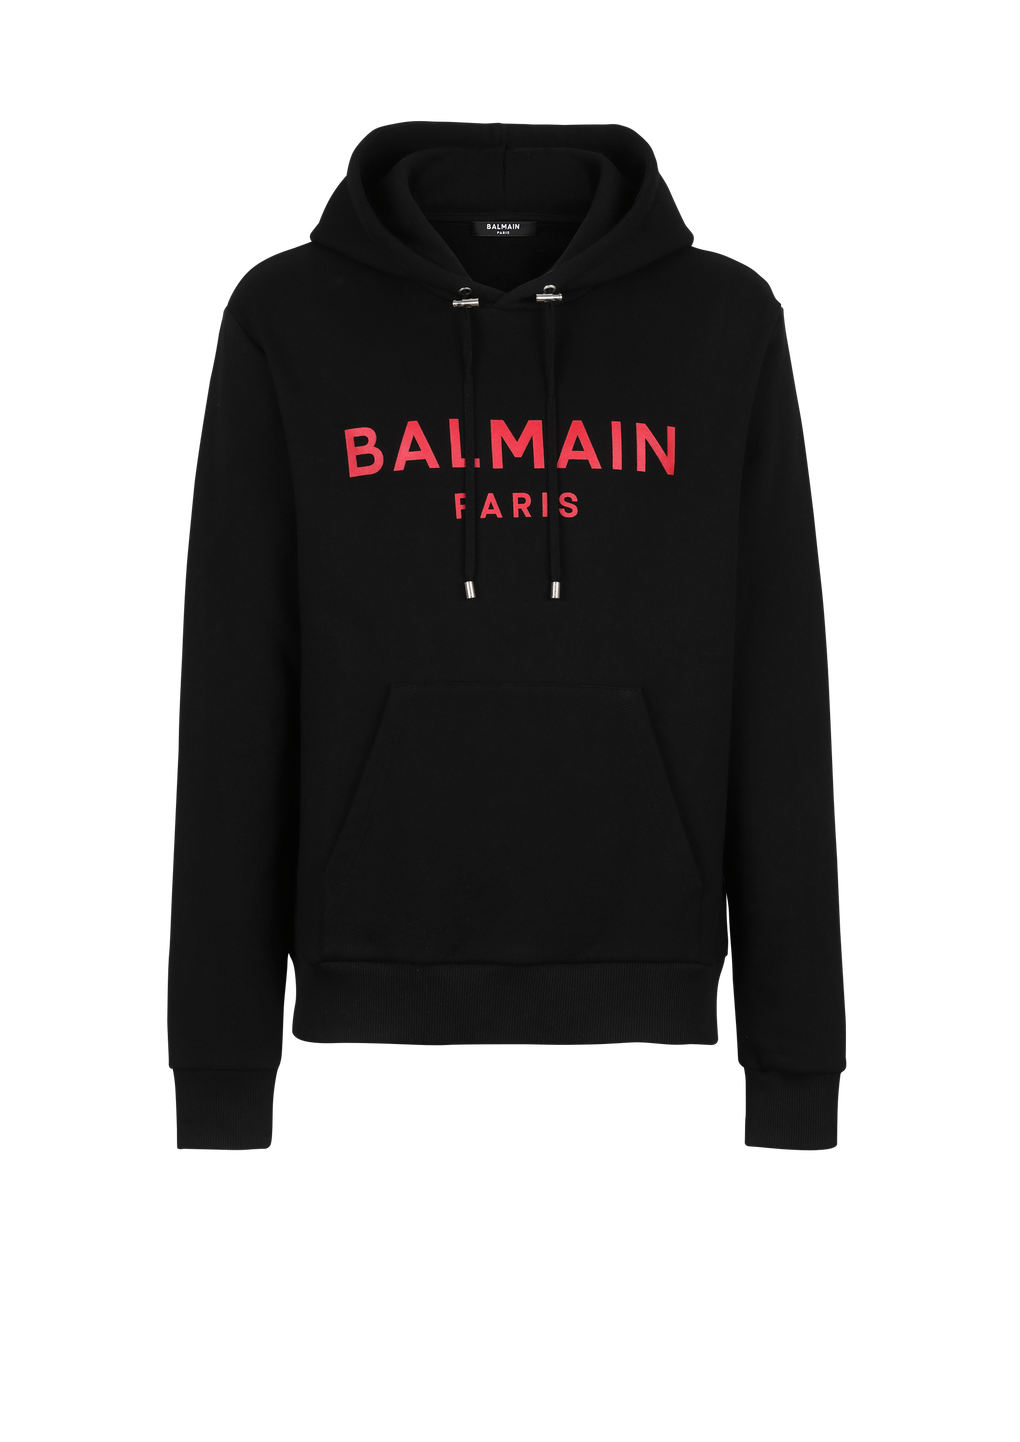 Cotton sweatshirt with Balmain Paris logo print, black, hi-res